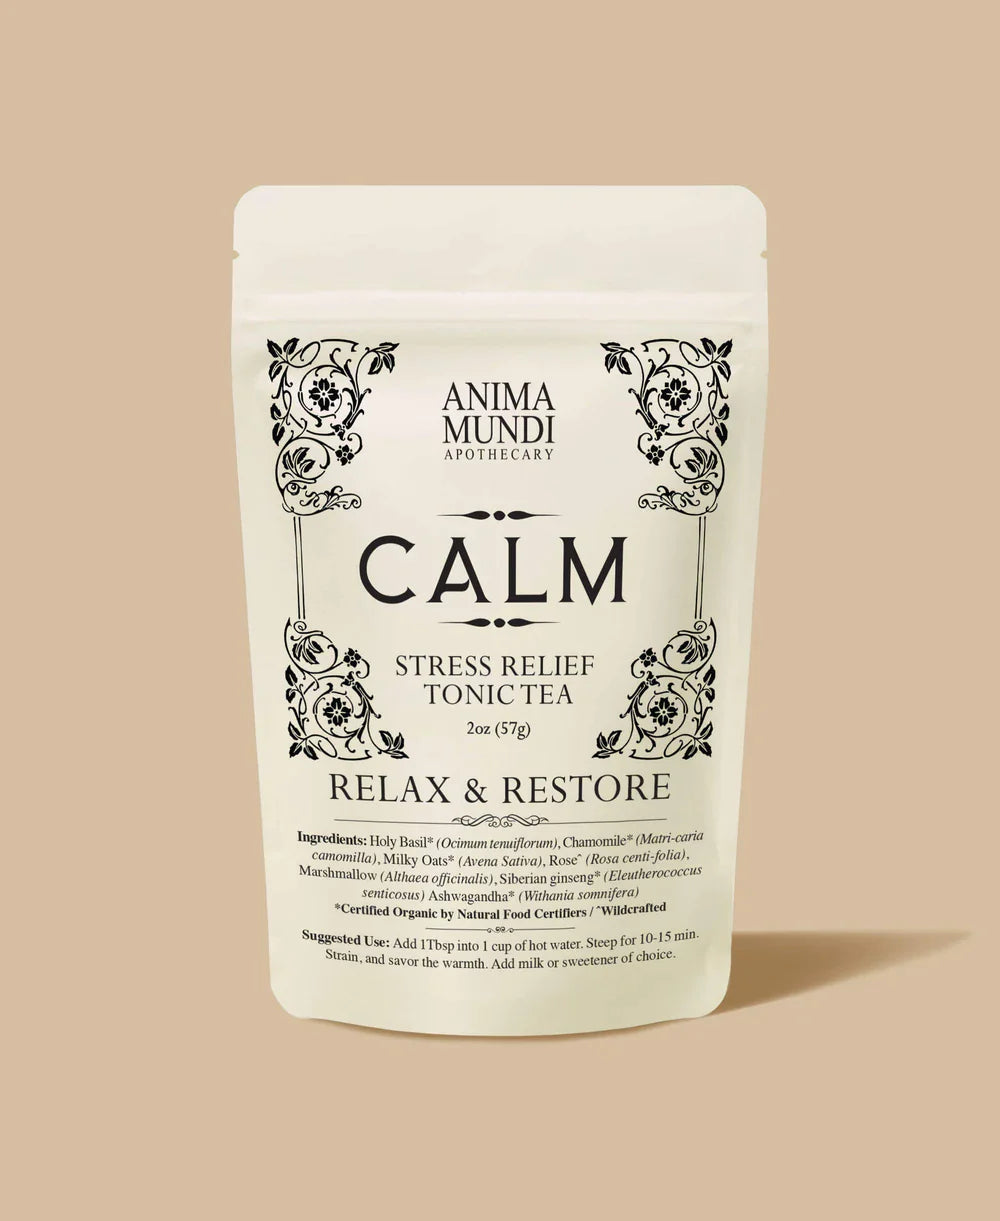 CALM TEA: Stress Relief Tonic Tea [Pre-Order]